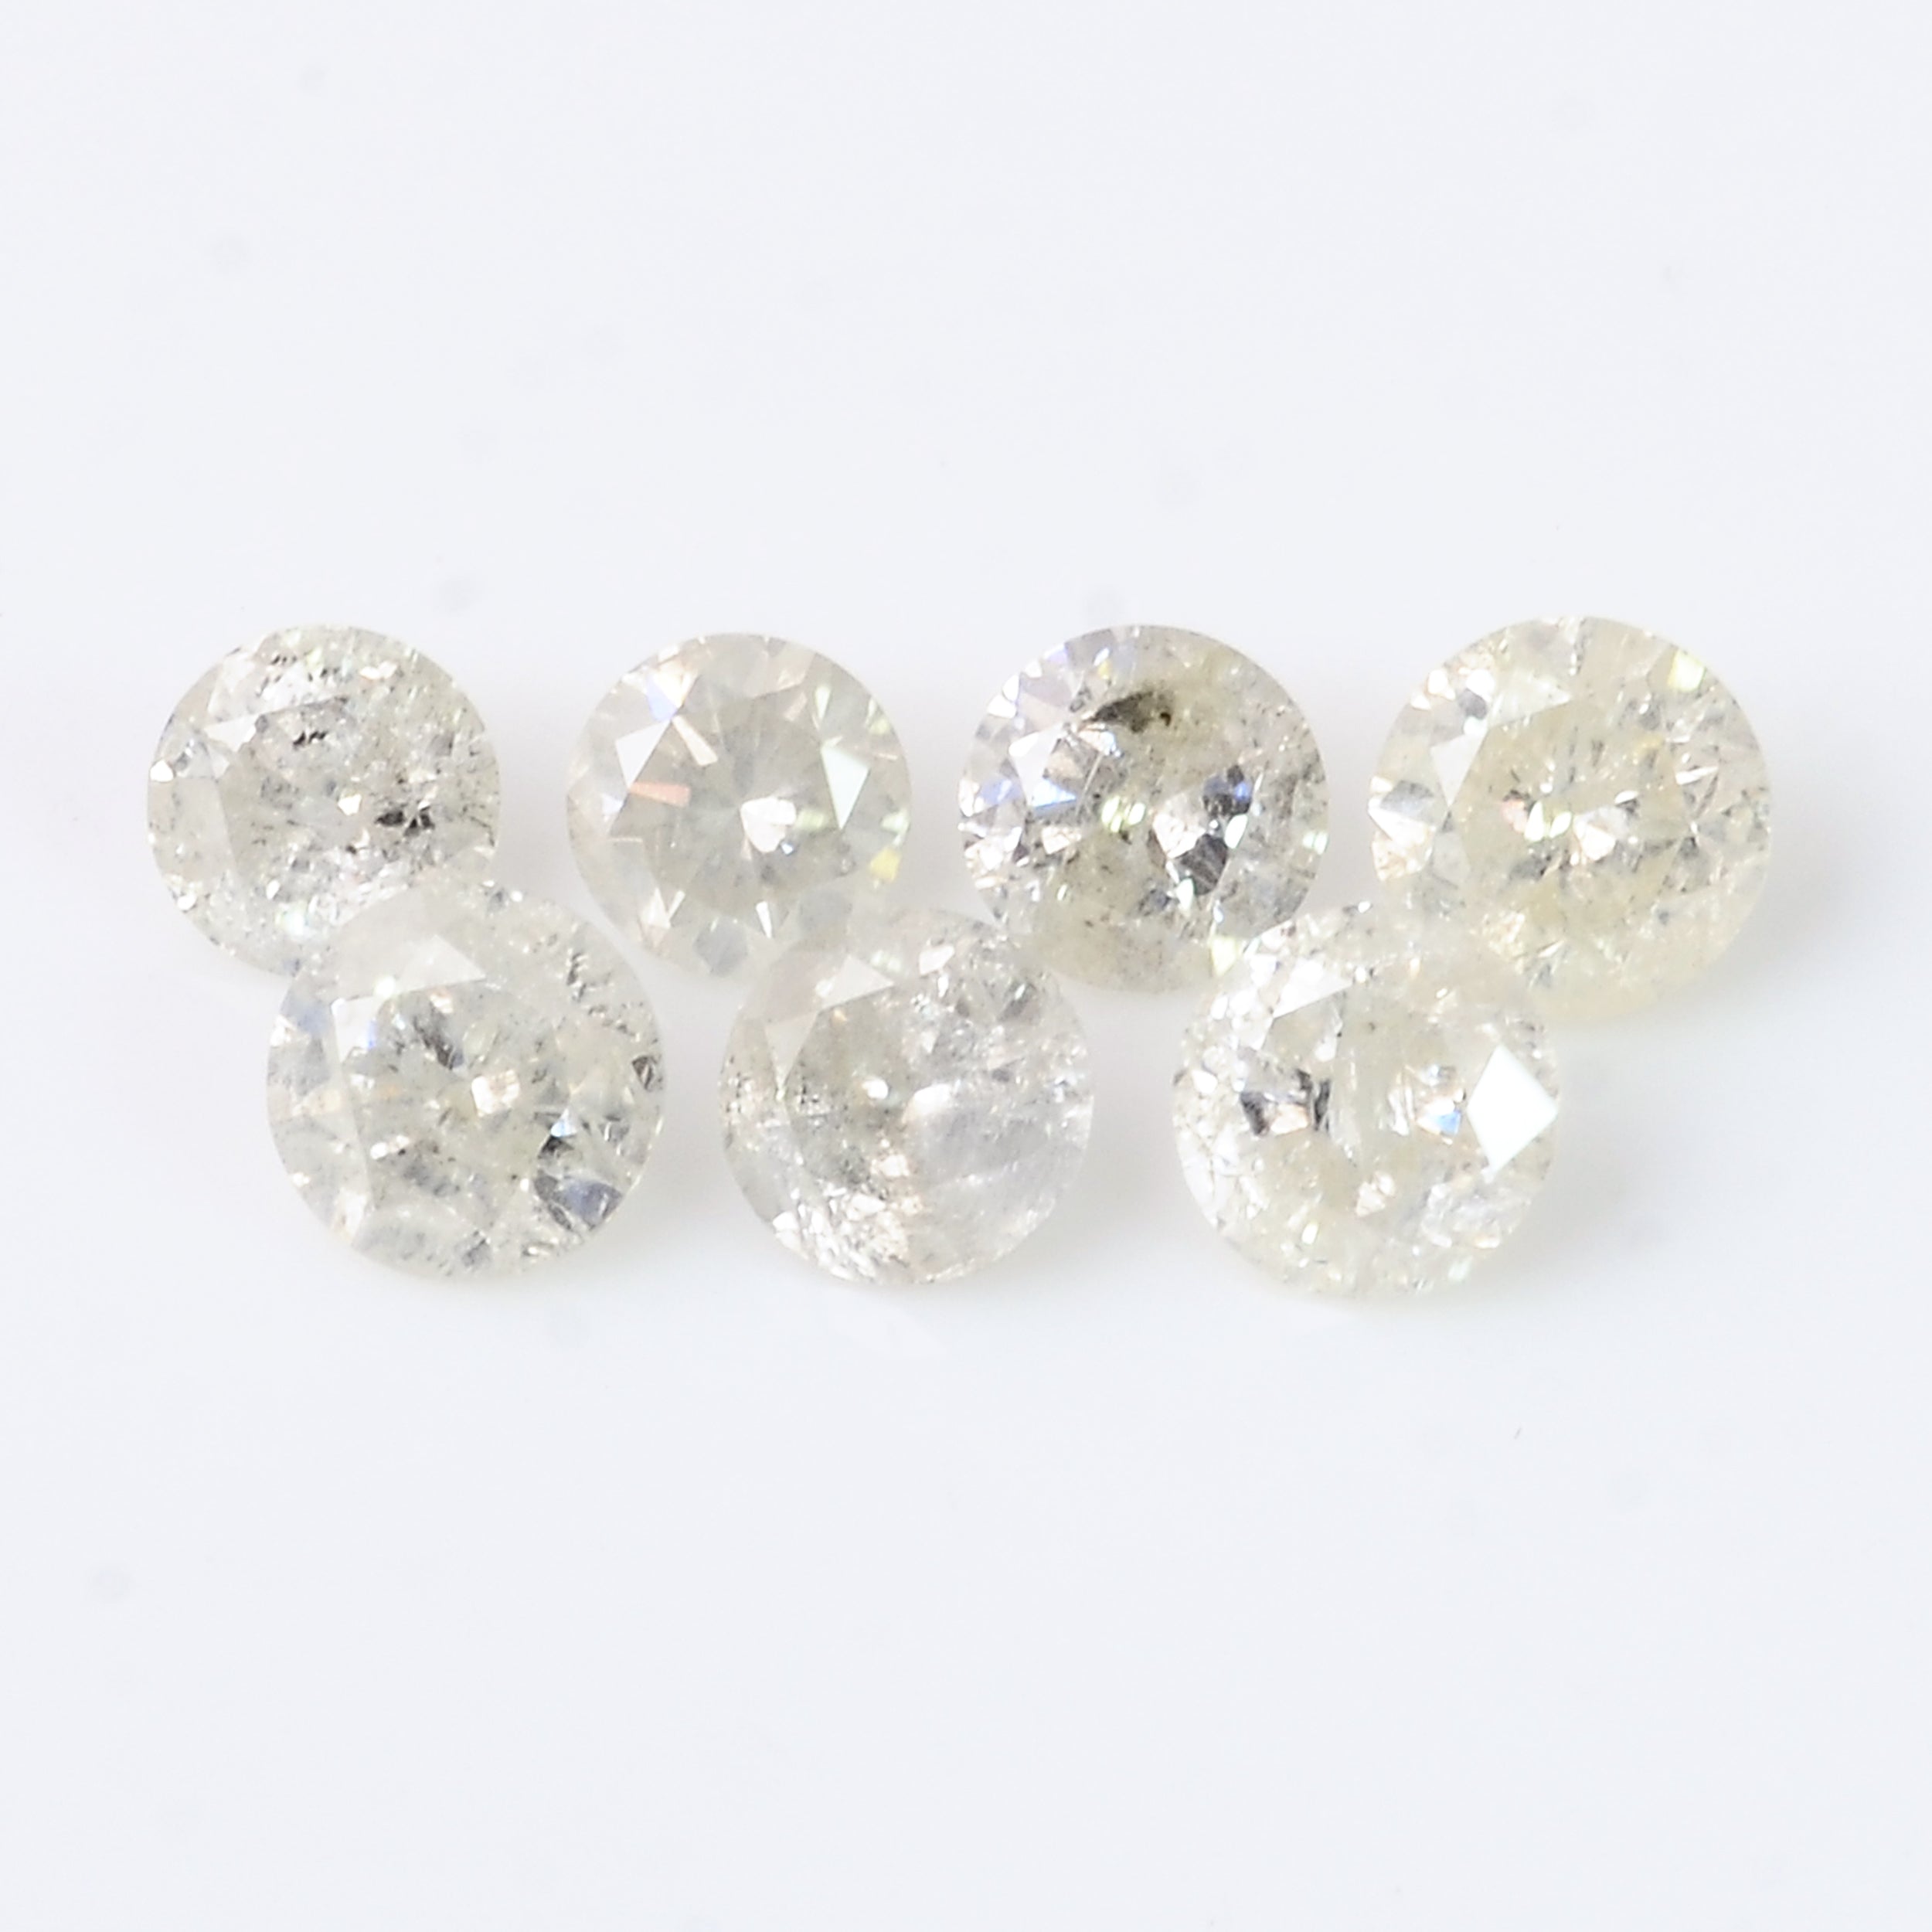 Buy amazing diamonds online from the best diamond houses worldwide.